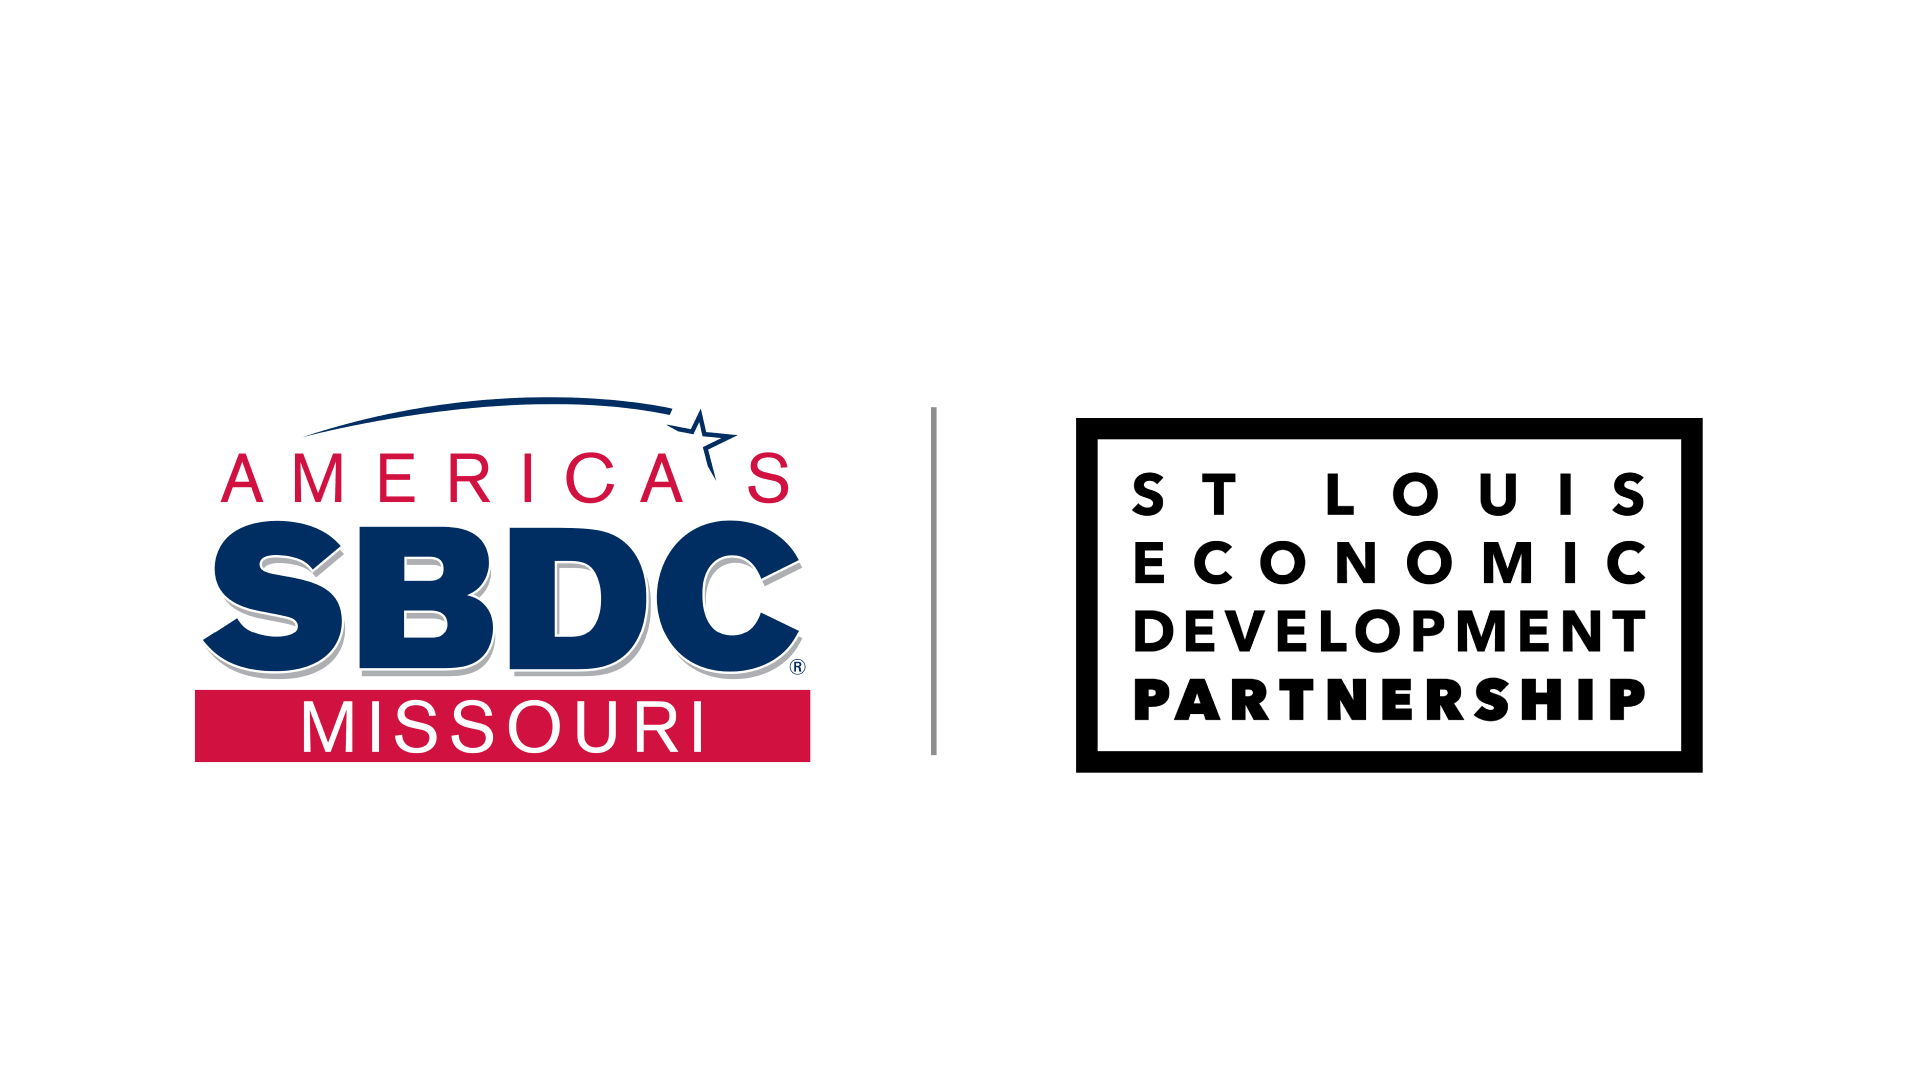 America's SBDC Missouri Logo next to the St. Louis Economic Development Partnership Logo